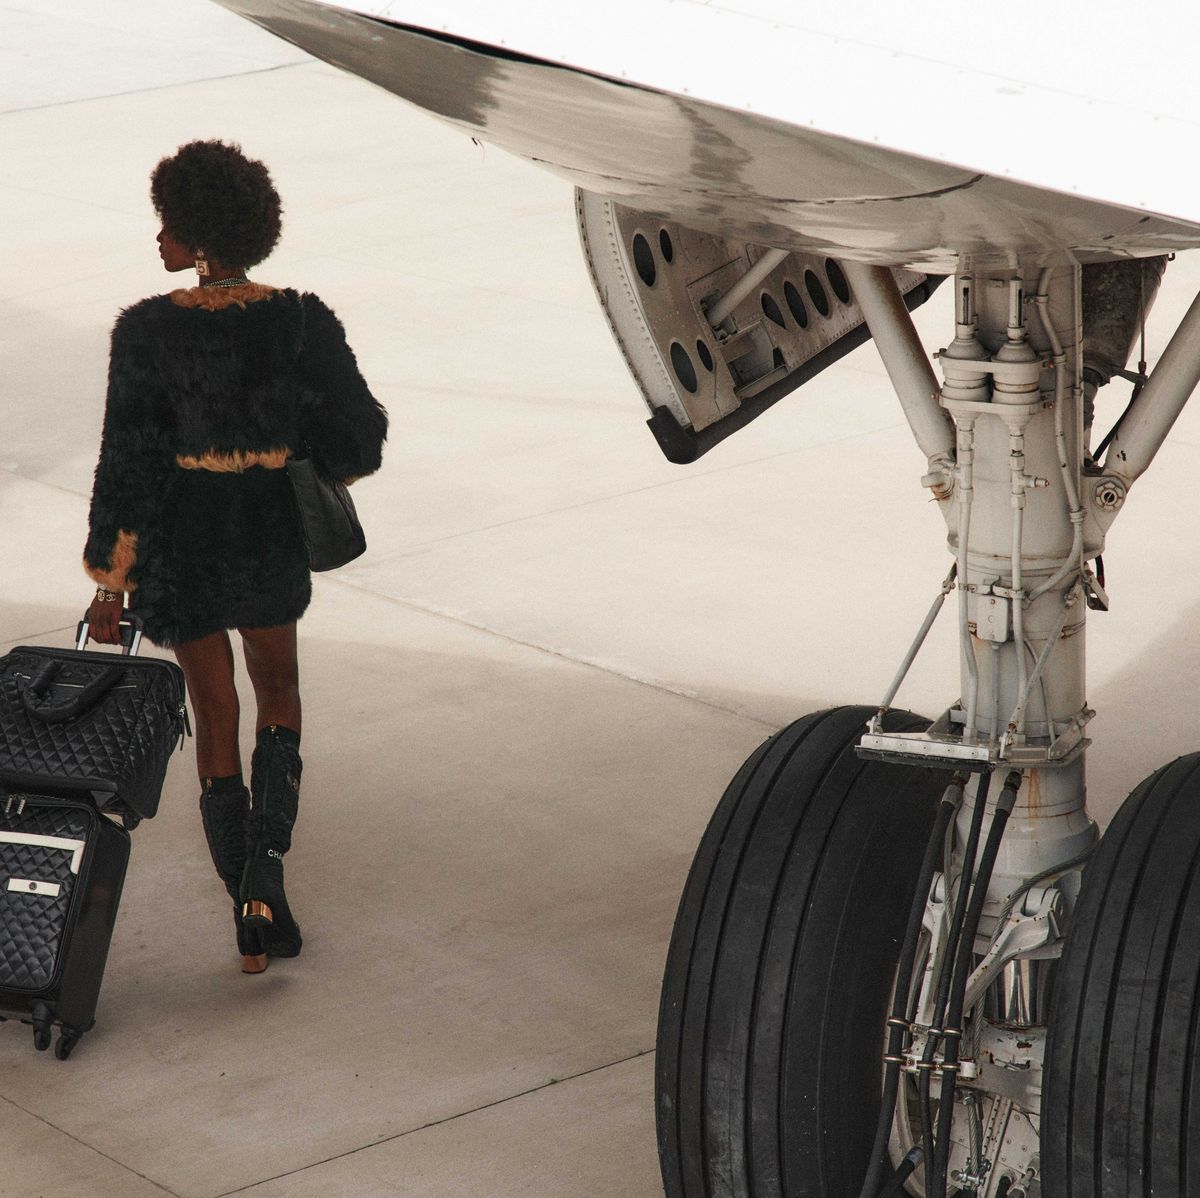 Louis Vuitton plane-shaped bag costs more than an actual plane